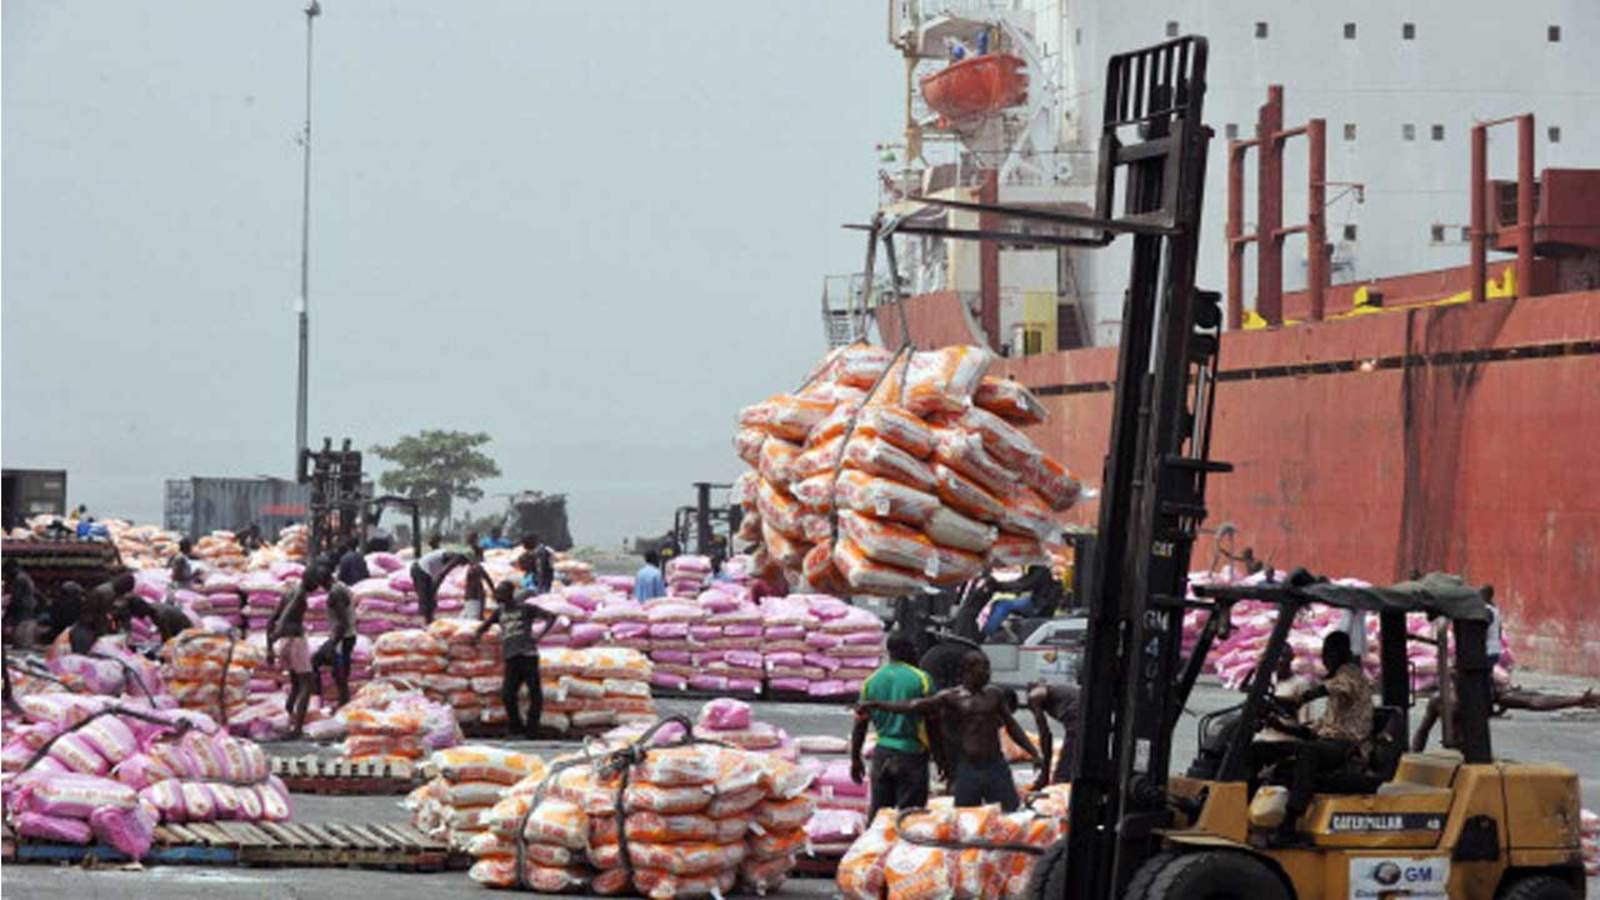 Nigeria still depends on food imports despite border closures, halting forex provision